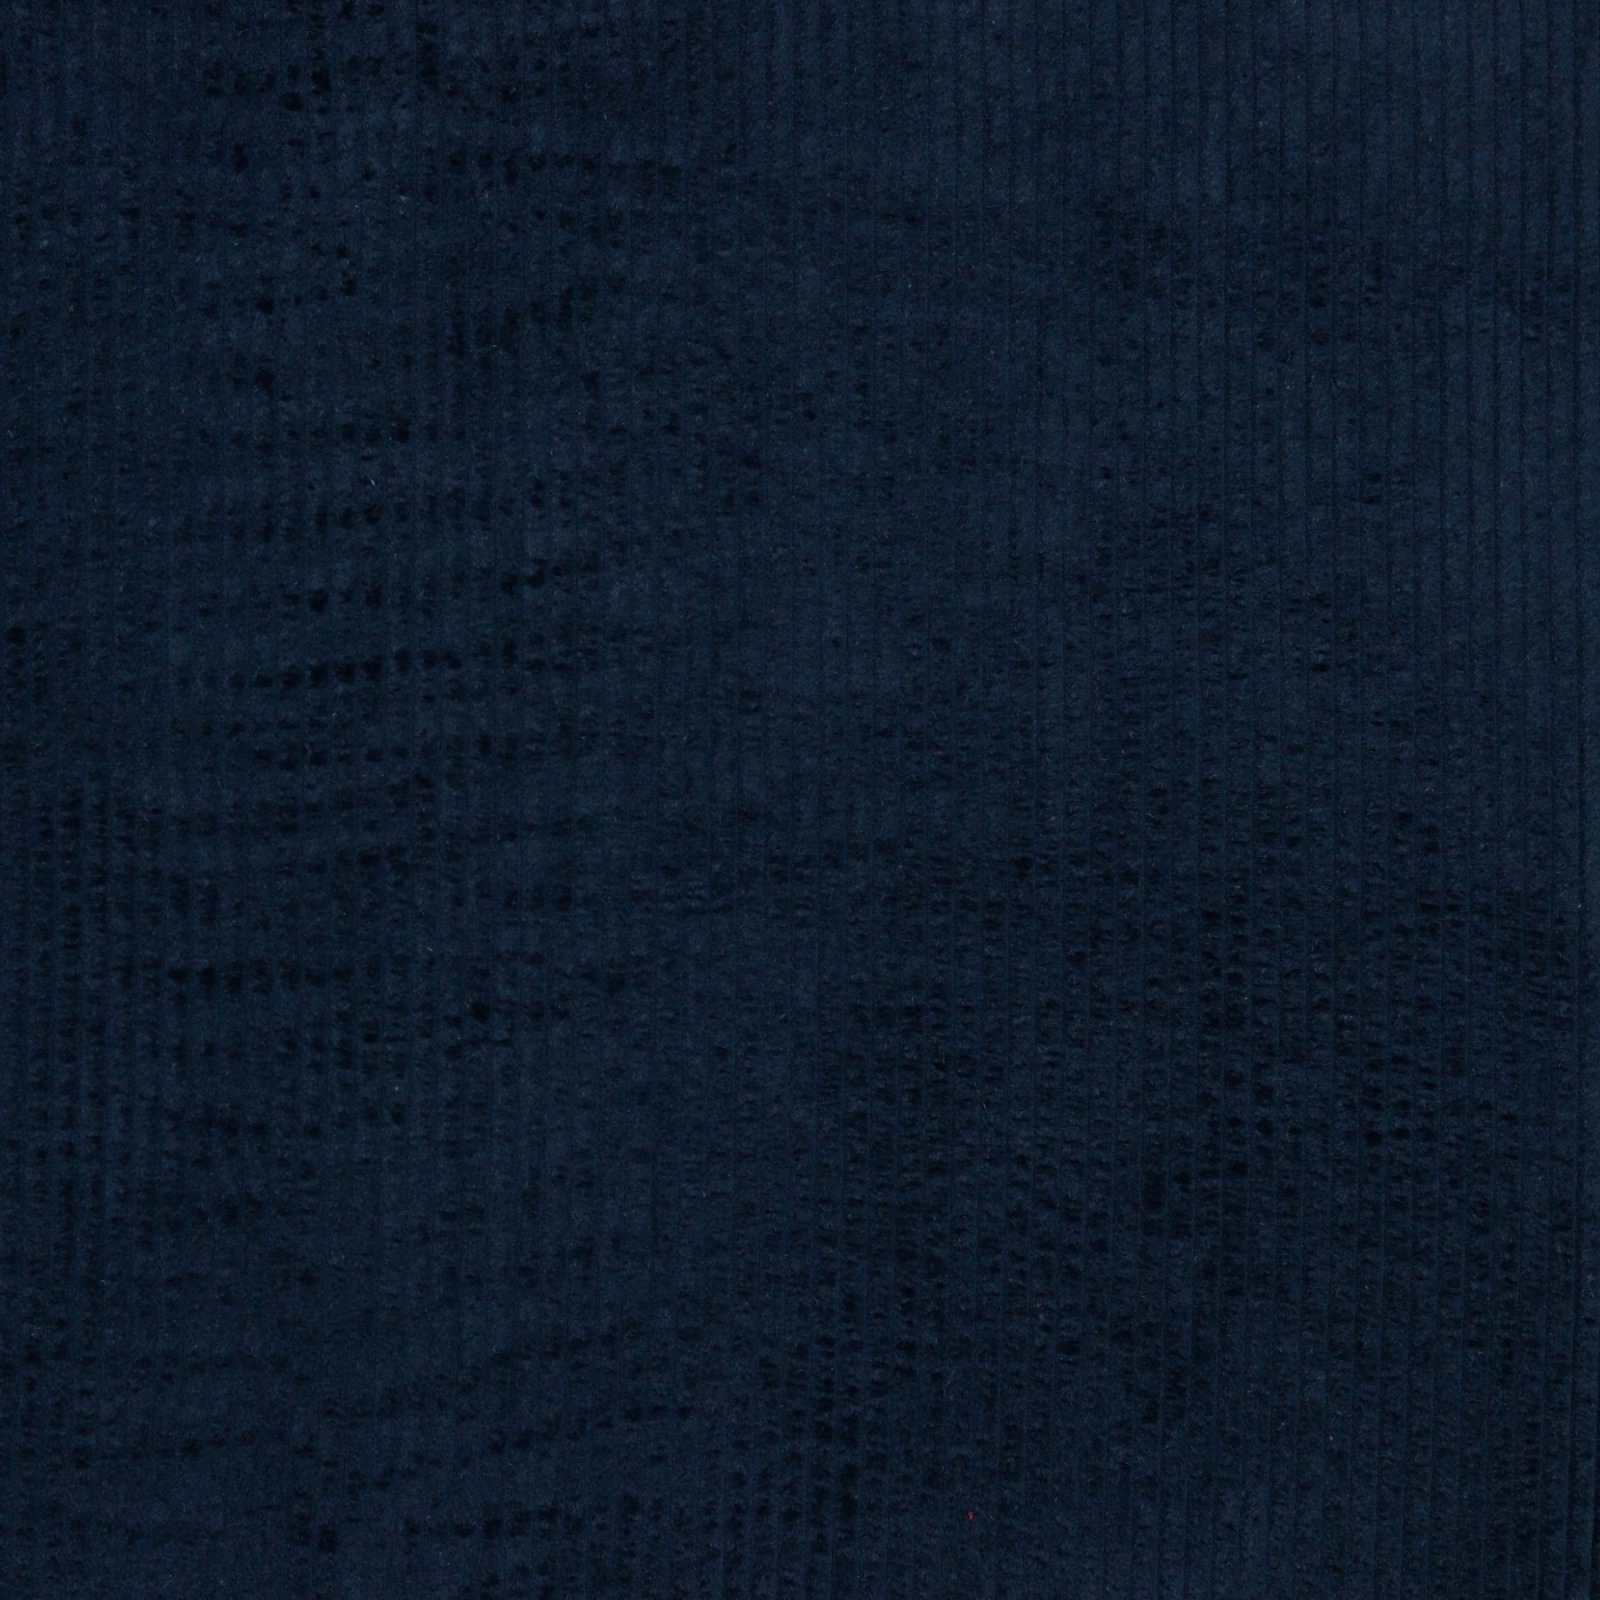 05m Breitcord Baumwolle Marine Blau